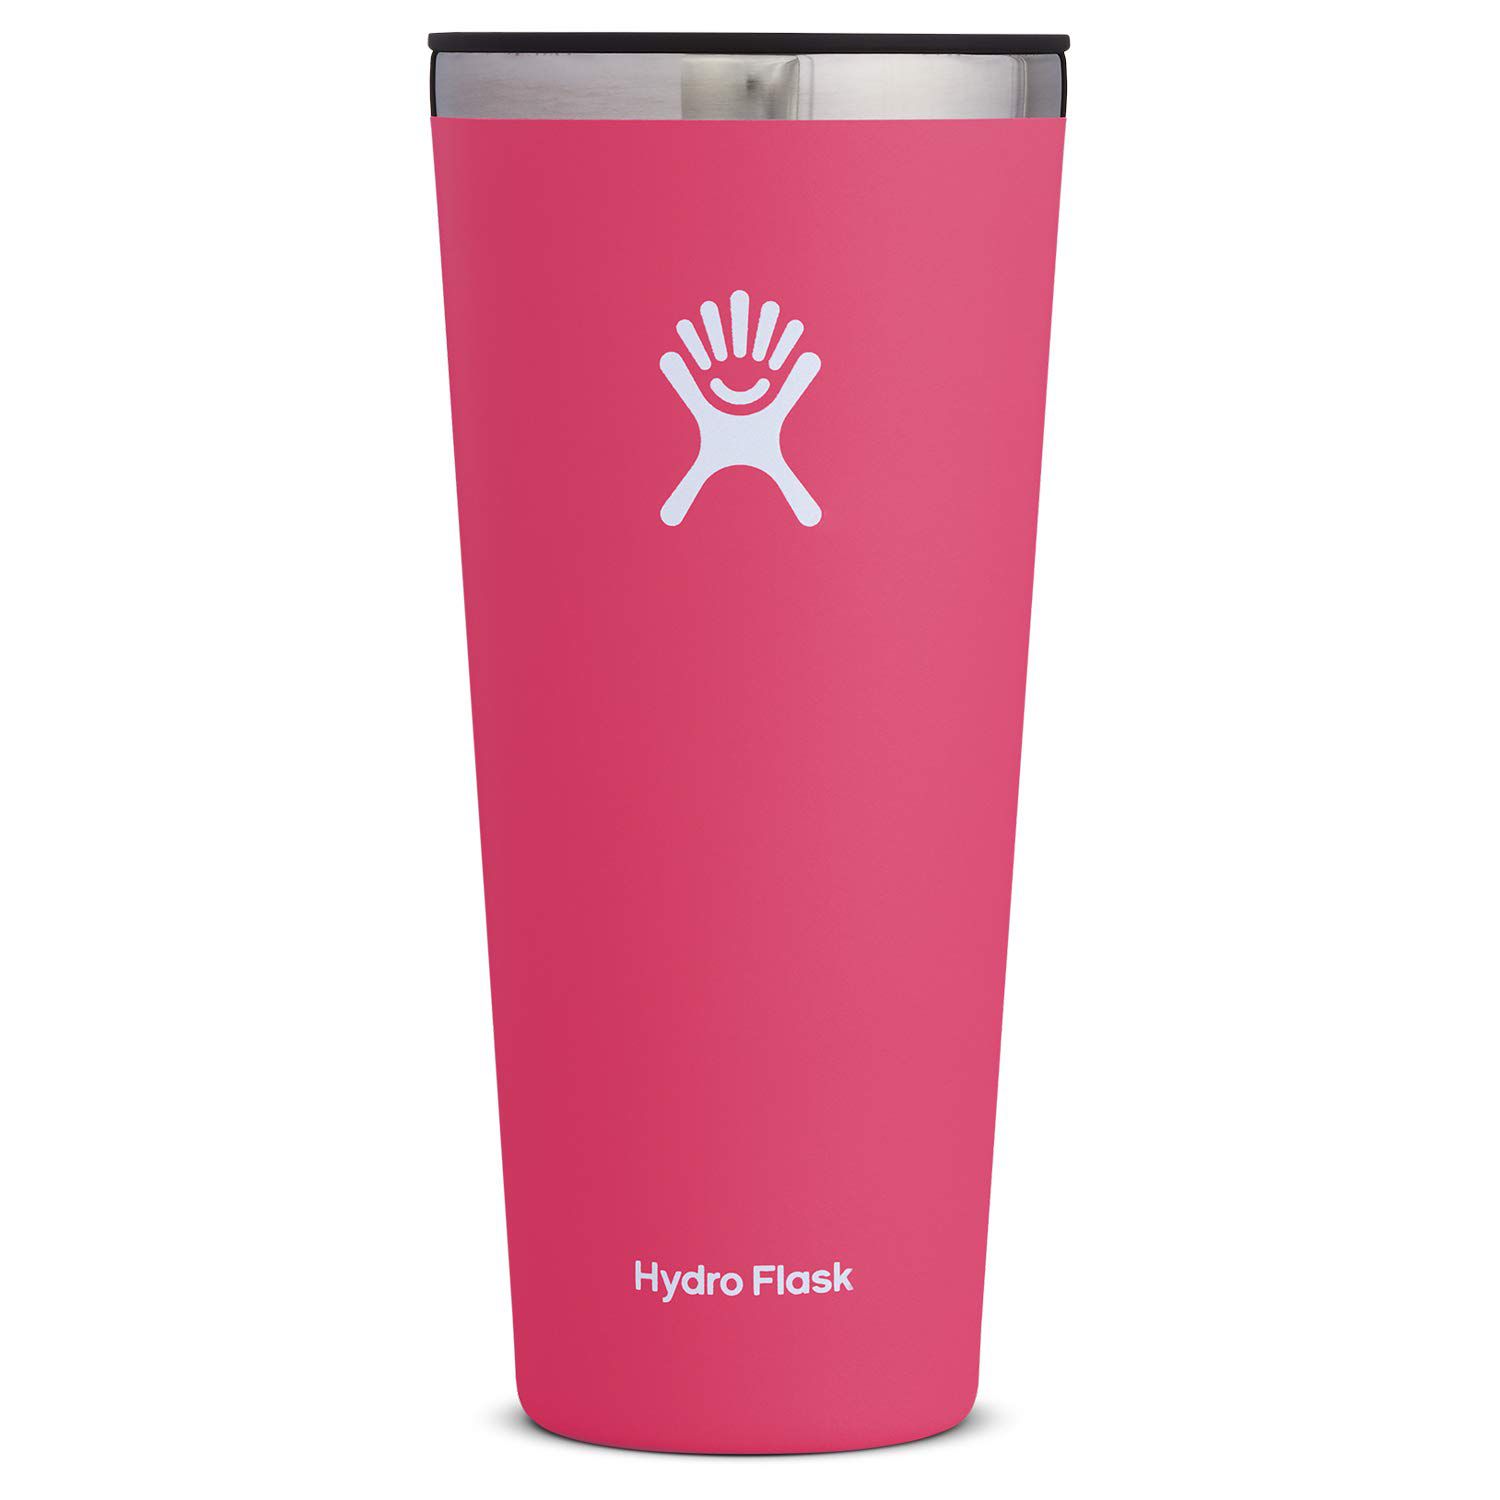 Hydro Flask Tumbler cup